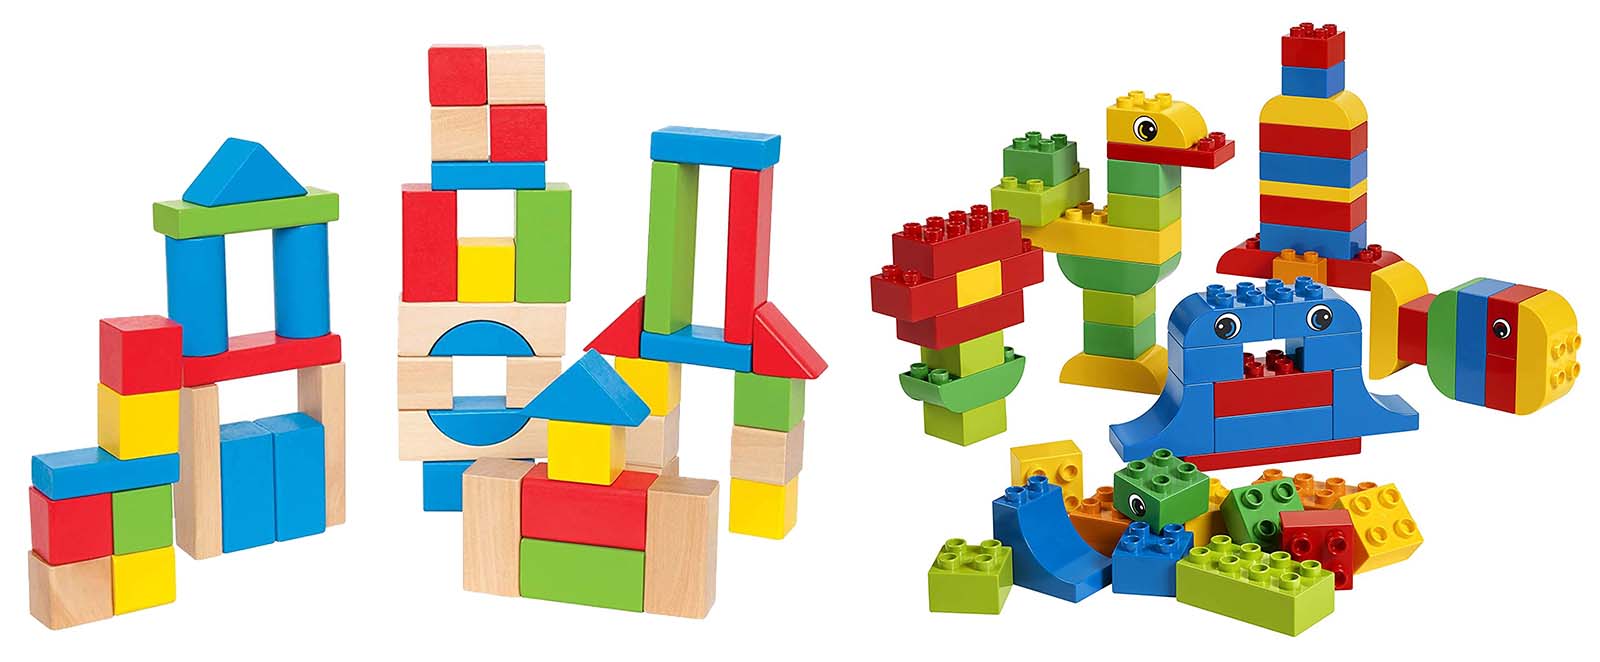 Building Blocks Name Game - The Imagination Tree